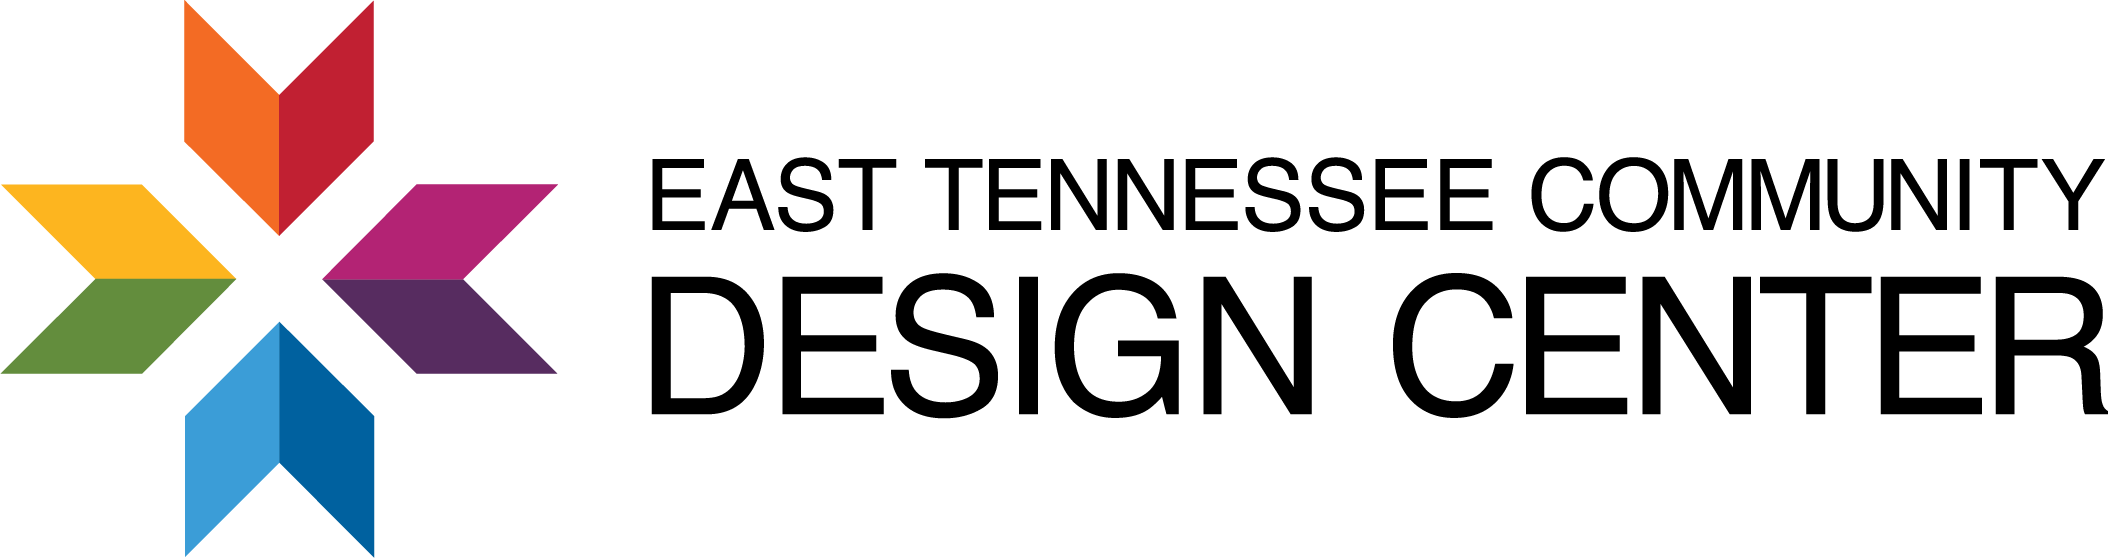 East Tennessee Community Design Center